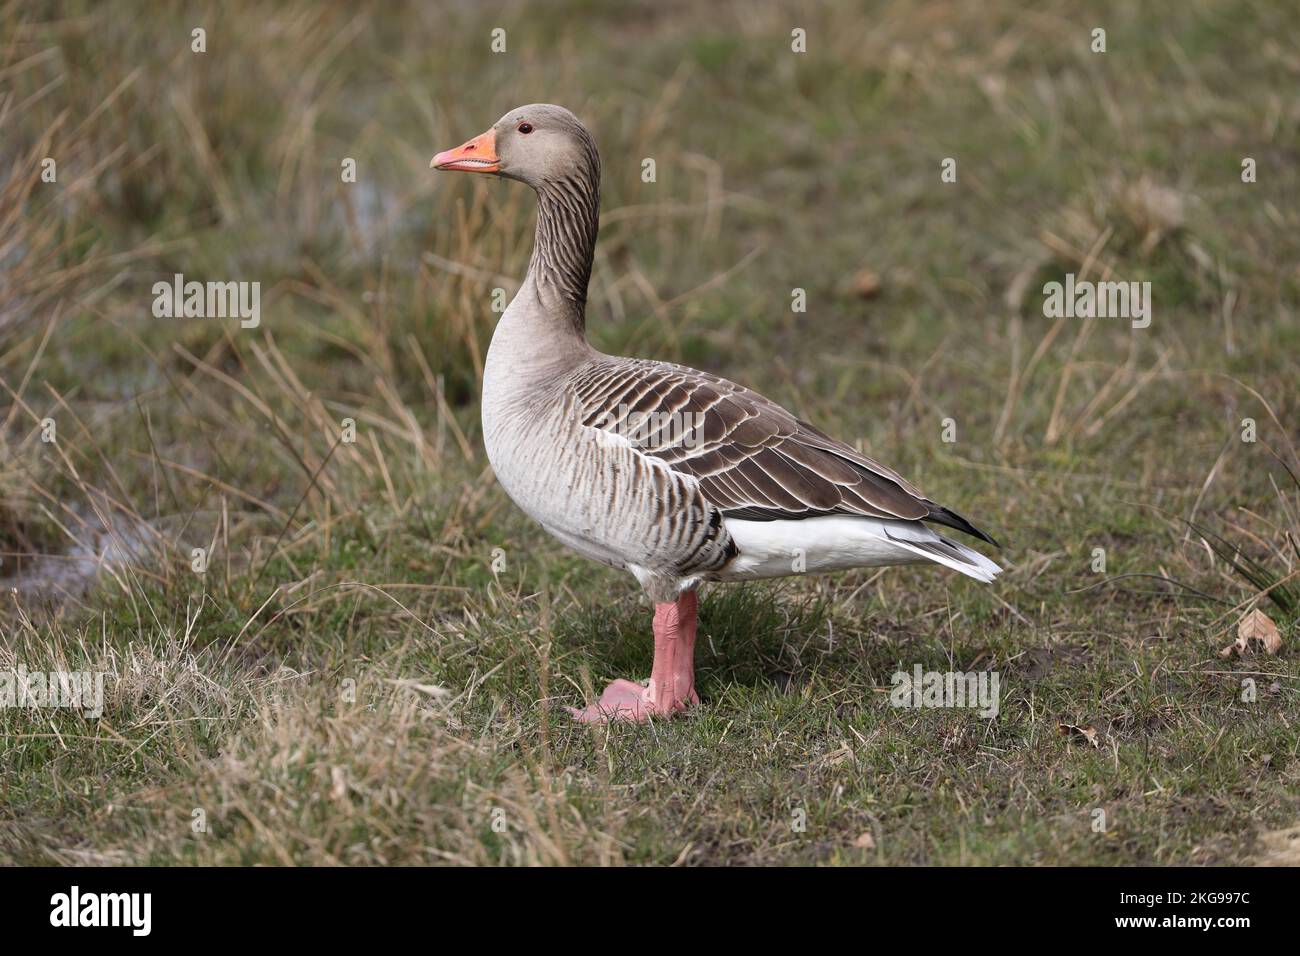 Greylag goose, Anser anser, F.amily Anatidae, Jægersborg Dyrehave, Dinamarca. Stock Photo